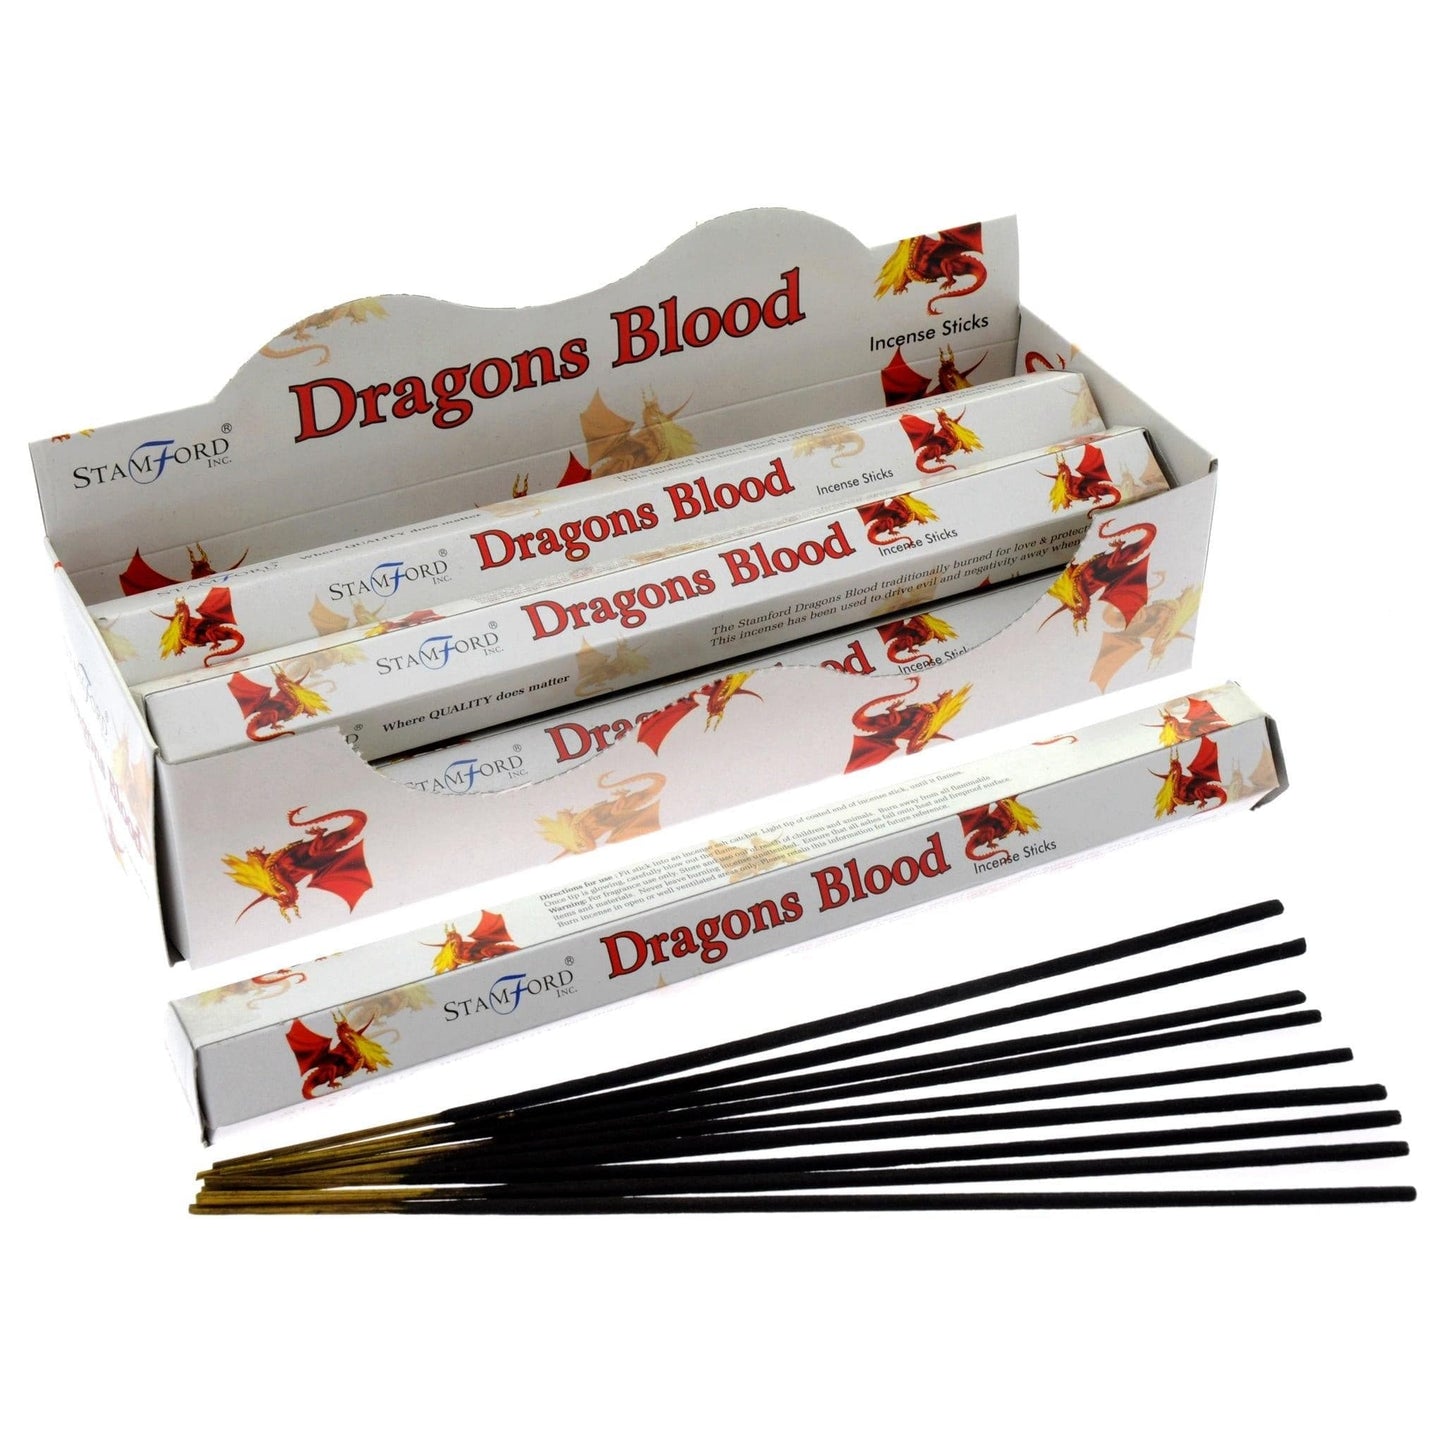 Stamford Dragon's Blood Incense Sticks.